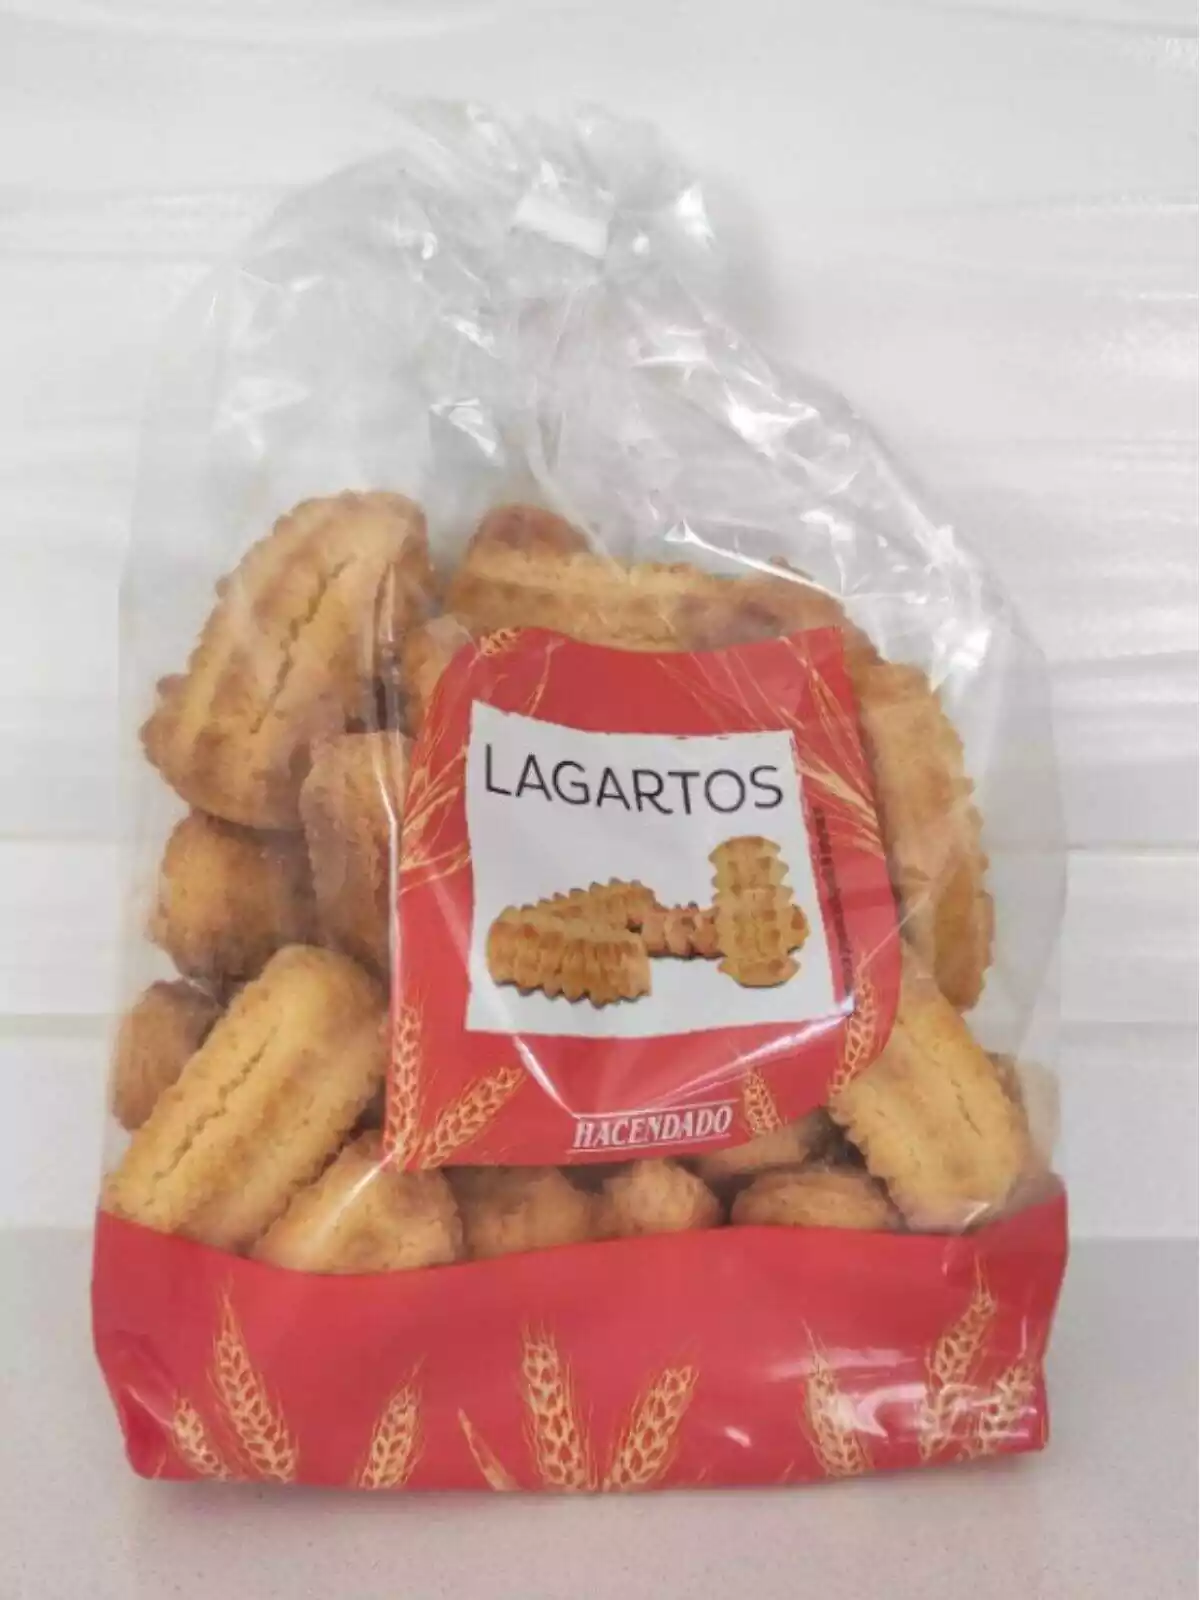 Bolsa de lagartos pastas portuguesas de venta en Mercadona